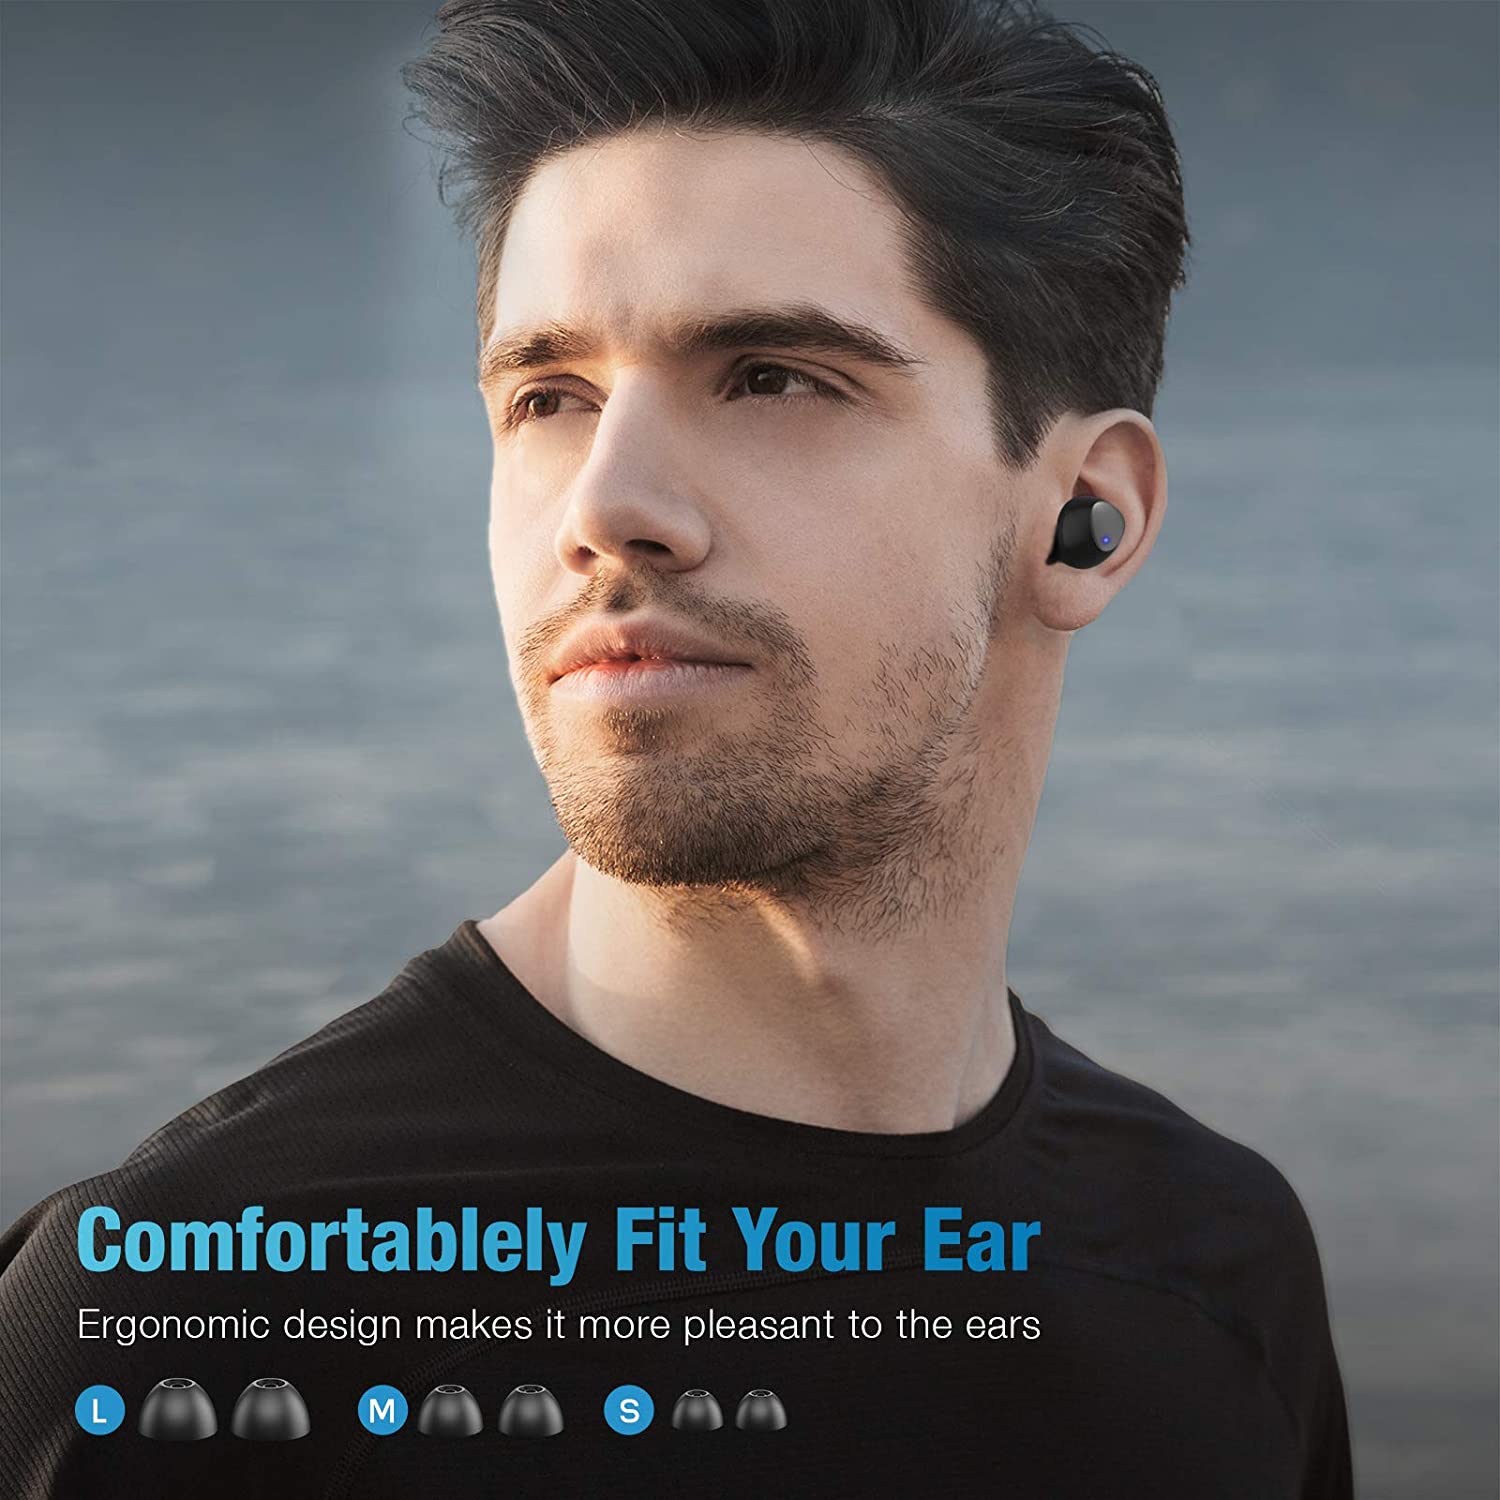 POWERADD S10 Bluetooth Kopfhörer